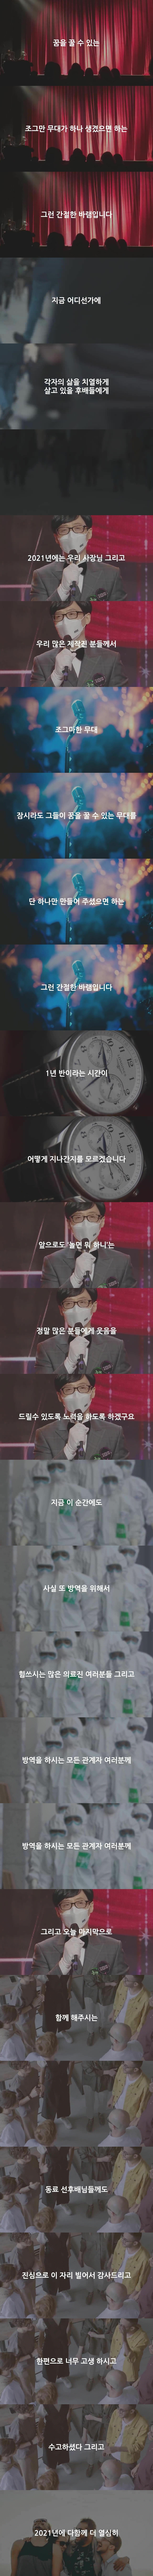 Yoo Jae-suk, MBC Entertainment Awards acceptance speech